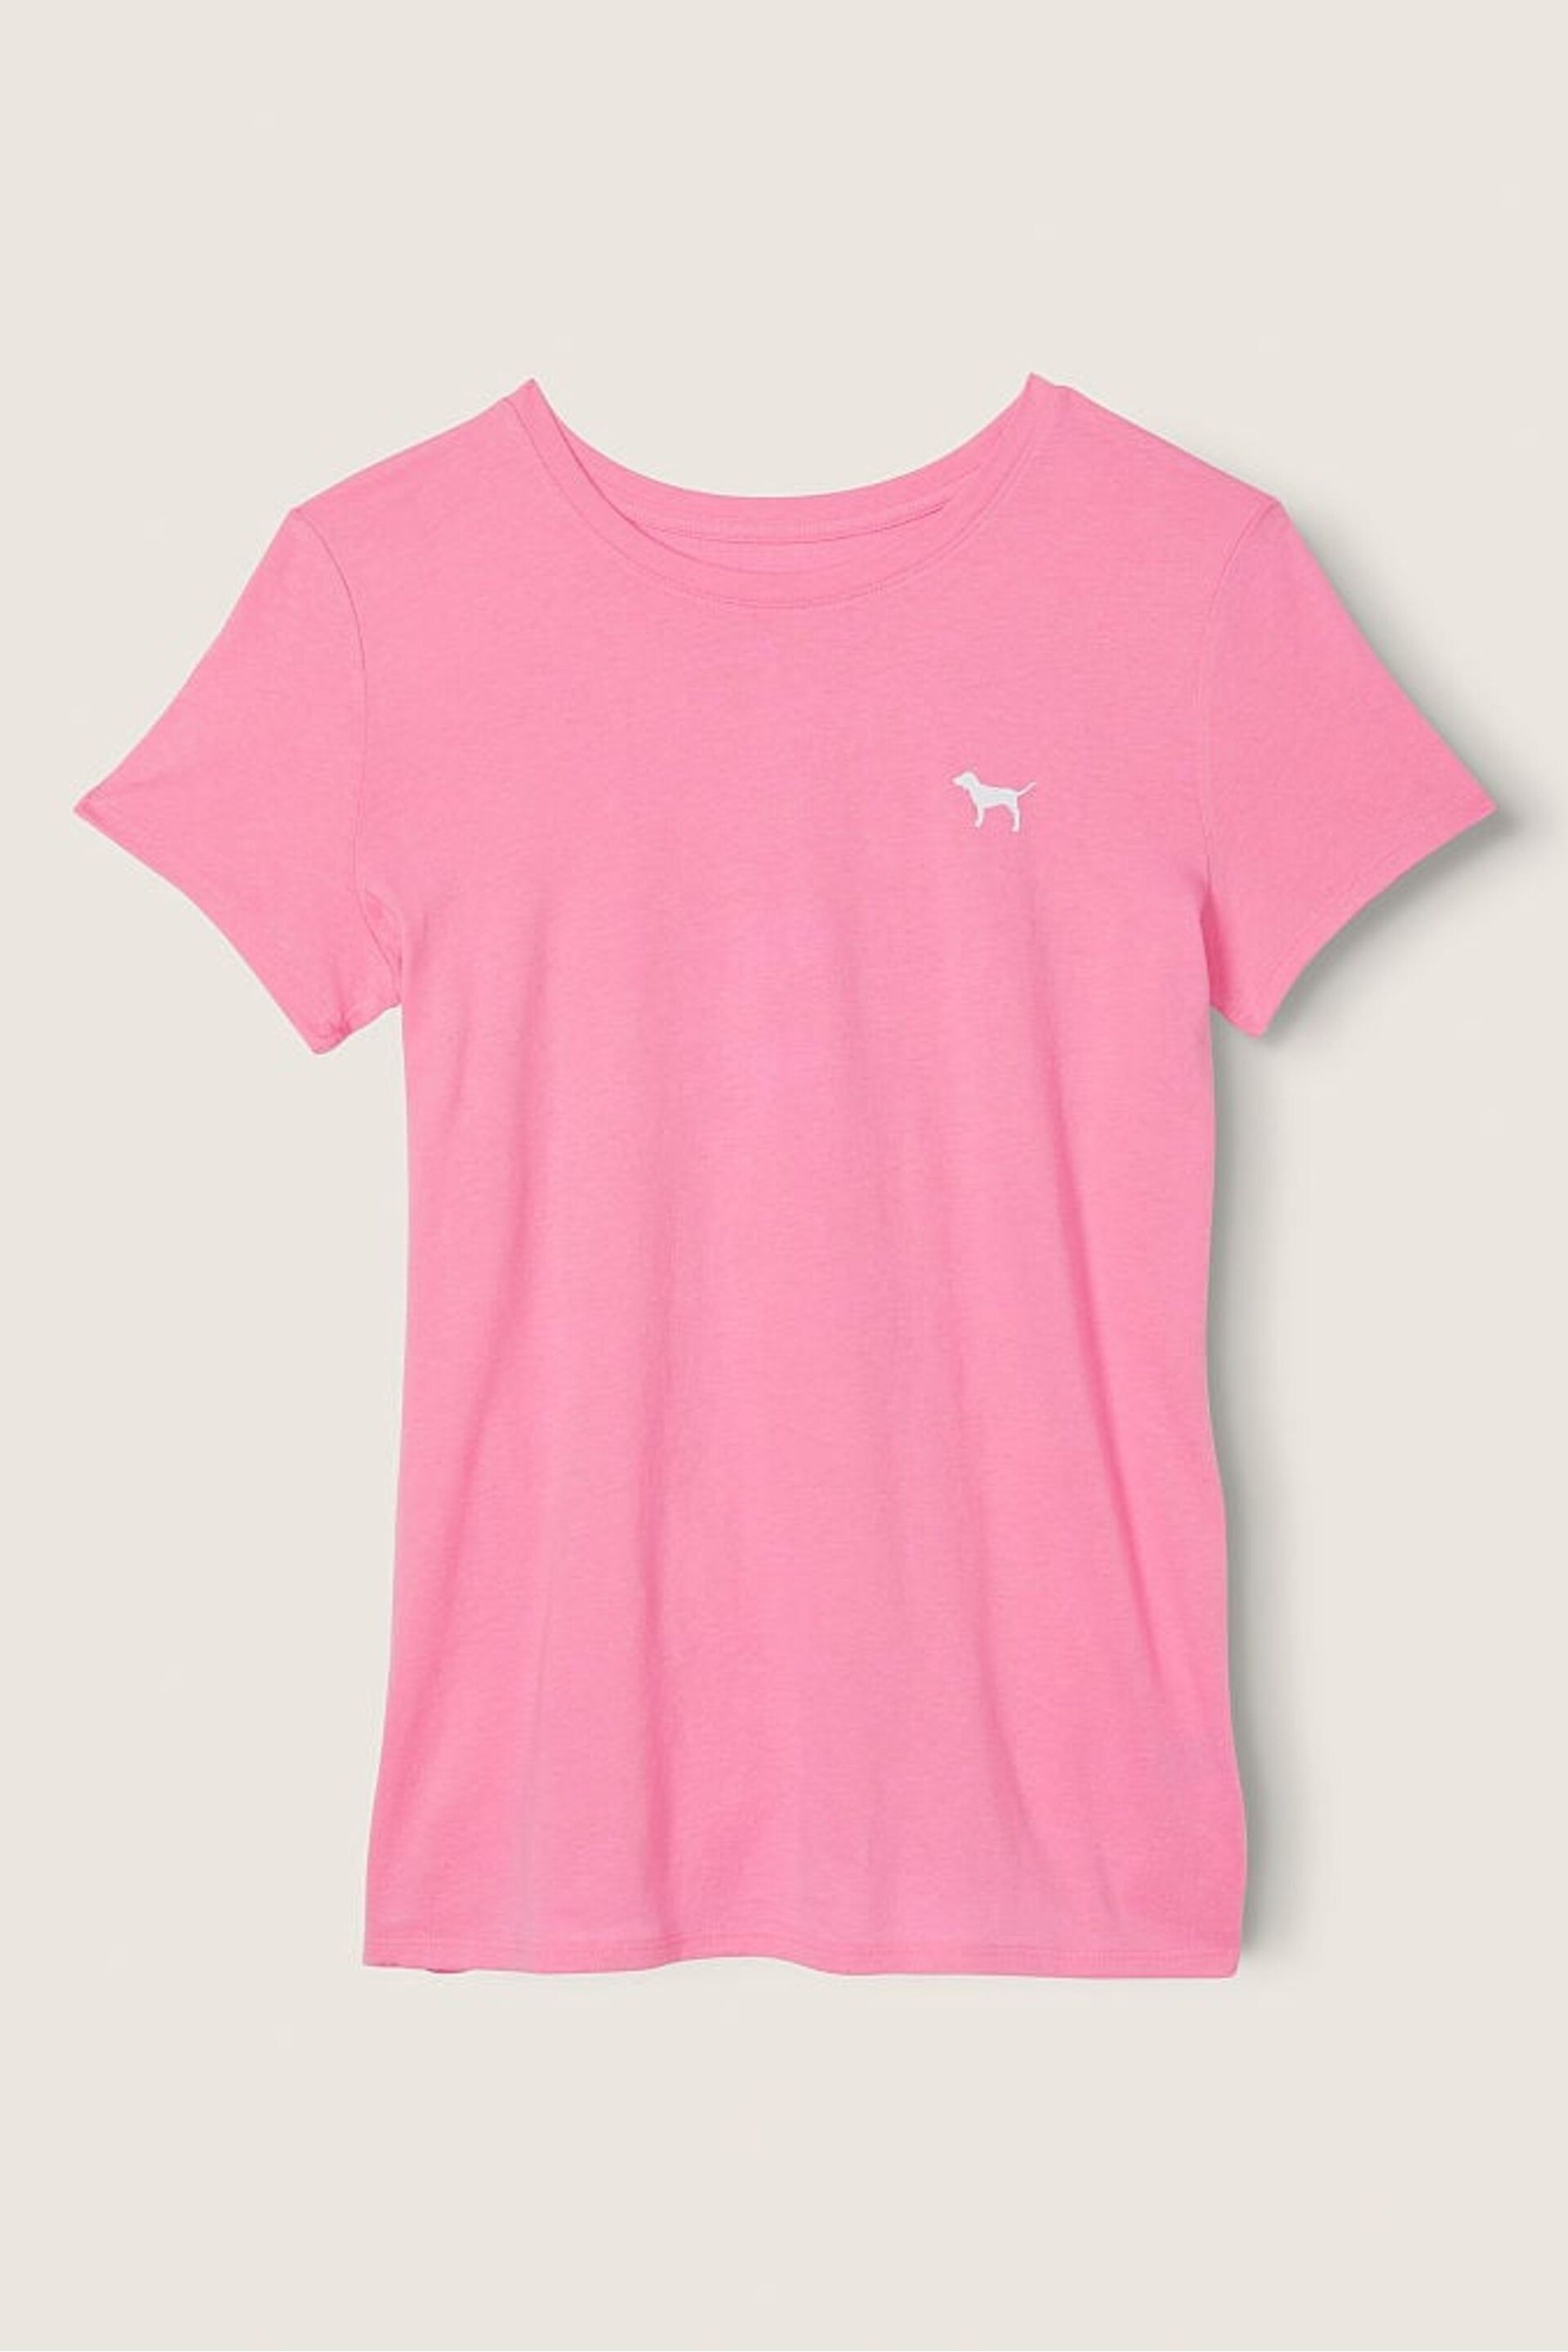 Victoria's Secret PINK Dreamy Pink Logo Short Sleeve T-Shirt - Image 4 of 5